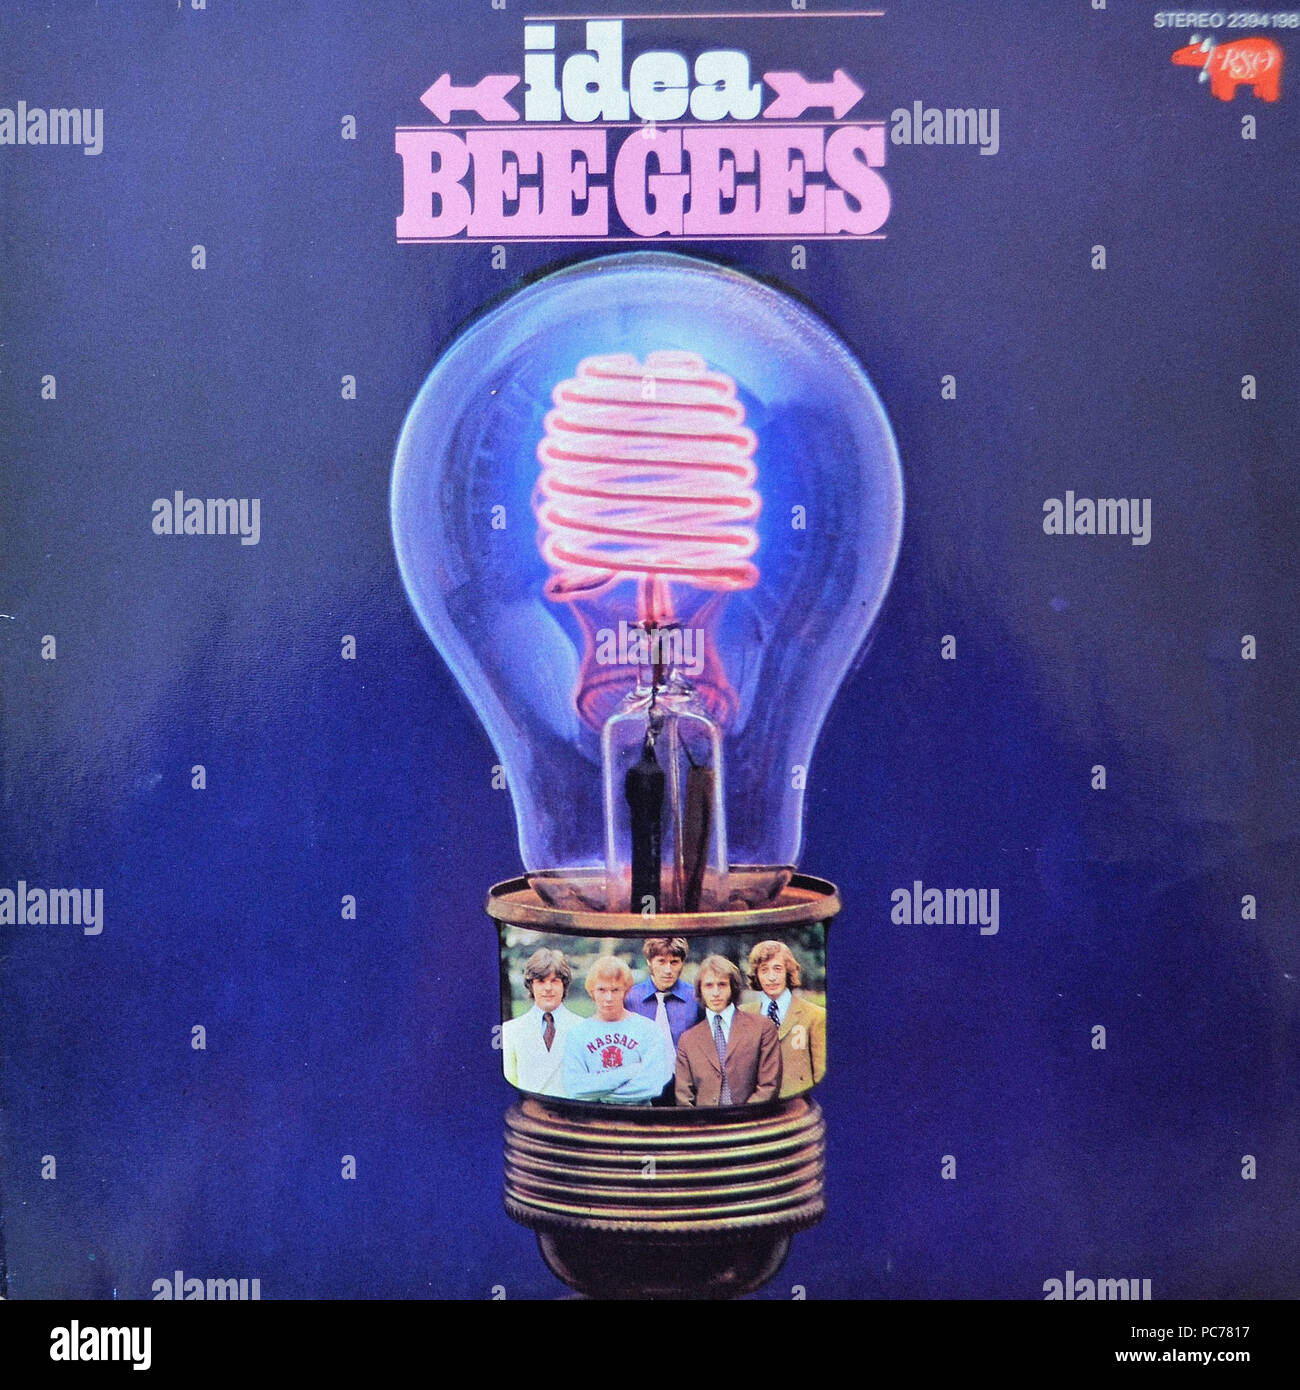 Bee Gees - Idee - Vintage Vinyl Album Cover Stockfoto